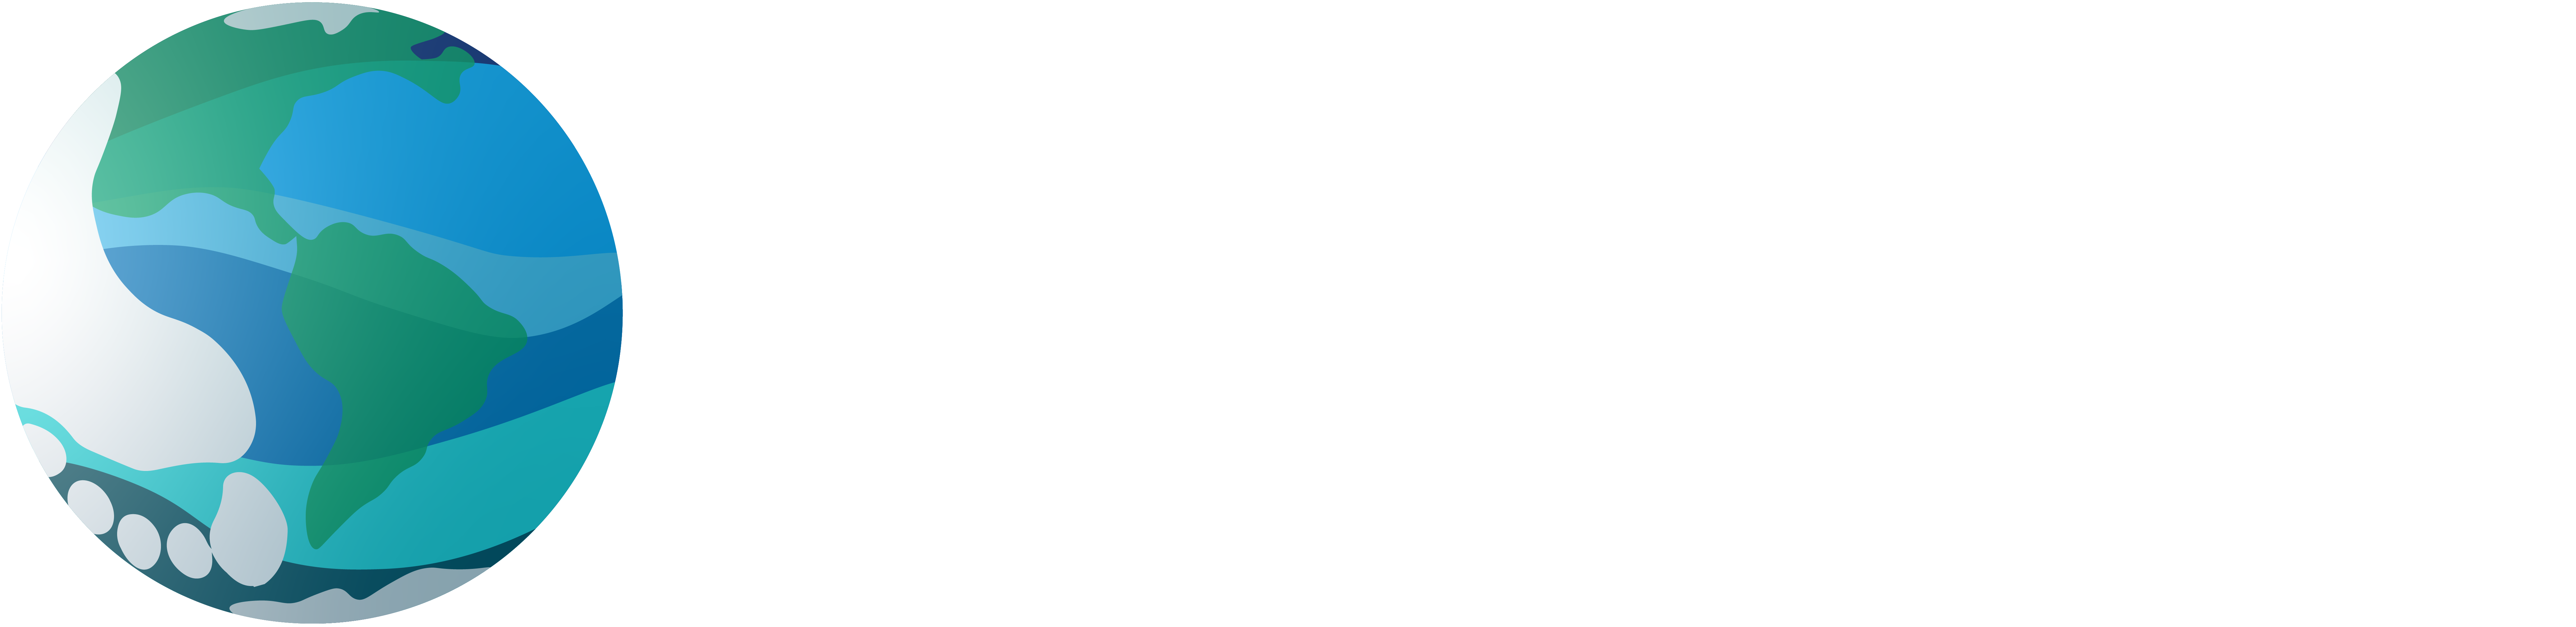 The Blue Footprint logo